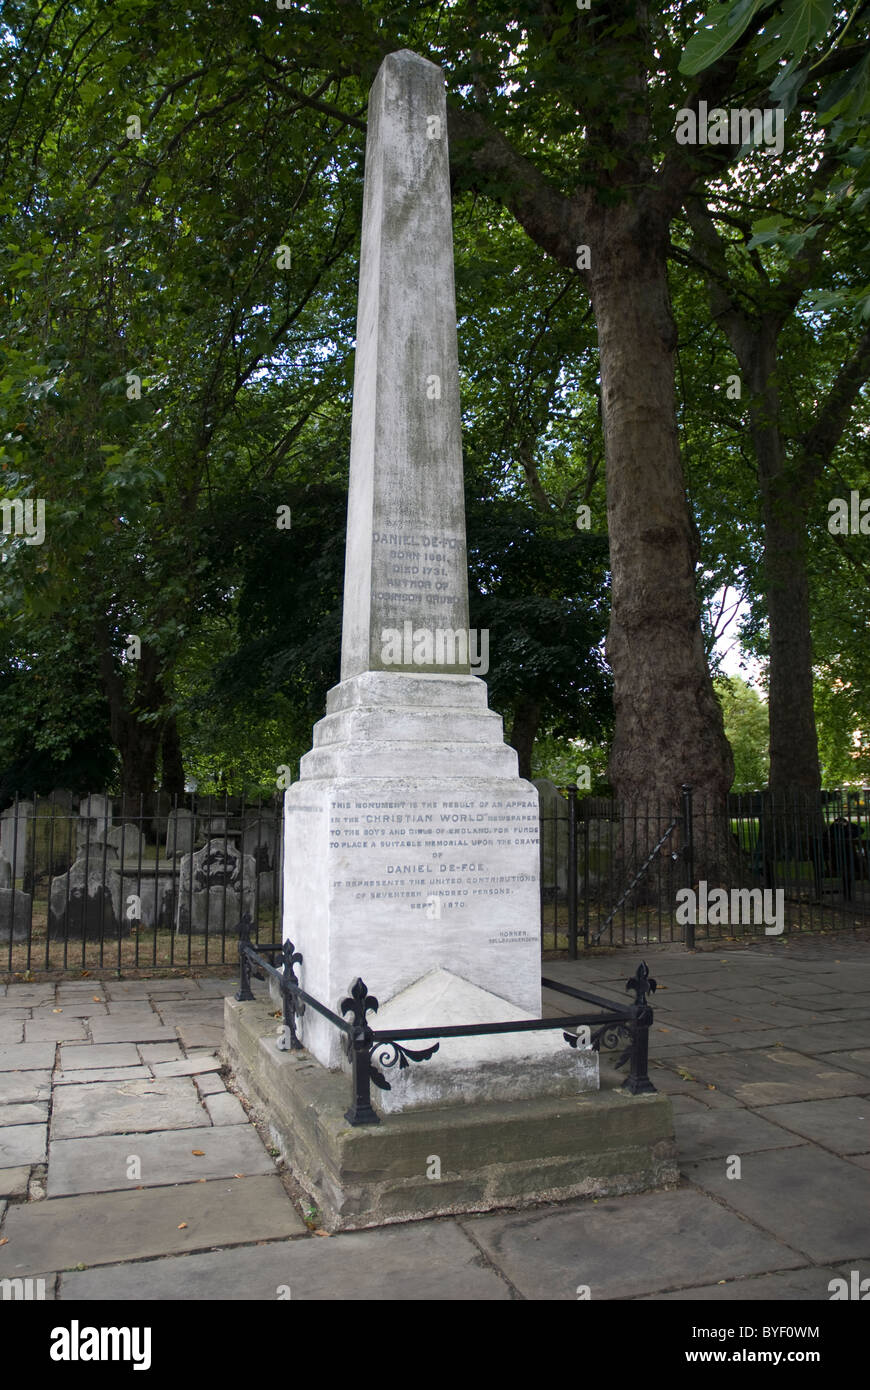 Daniel Defoe memorial 1661-1731 Bunhill Fields Cemetery London E1 Stock Photo